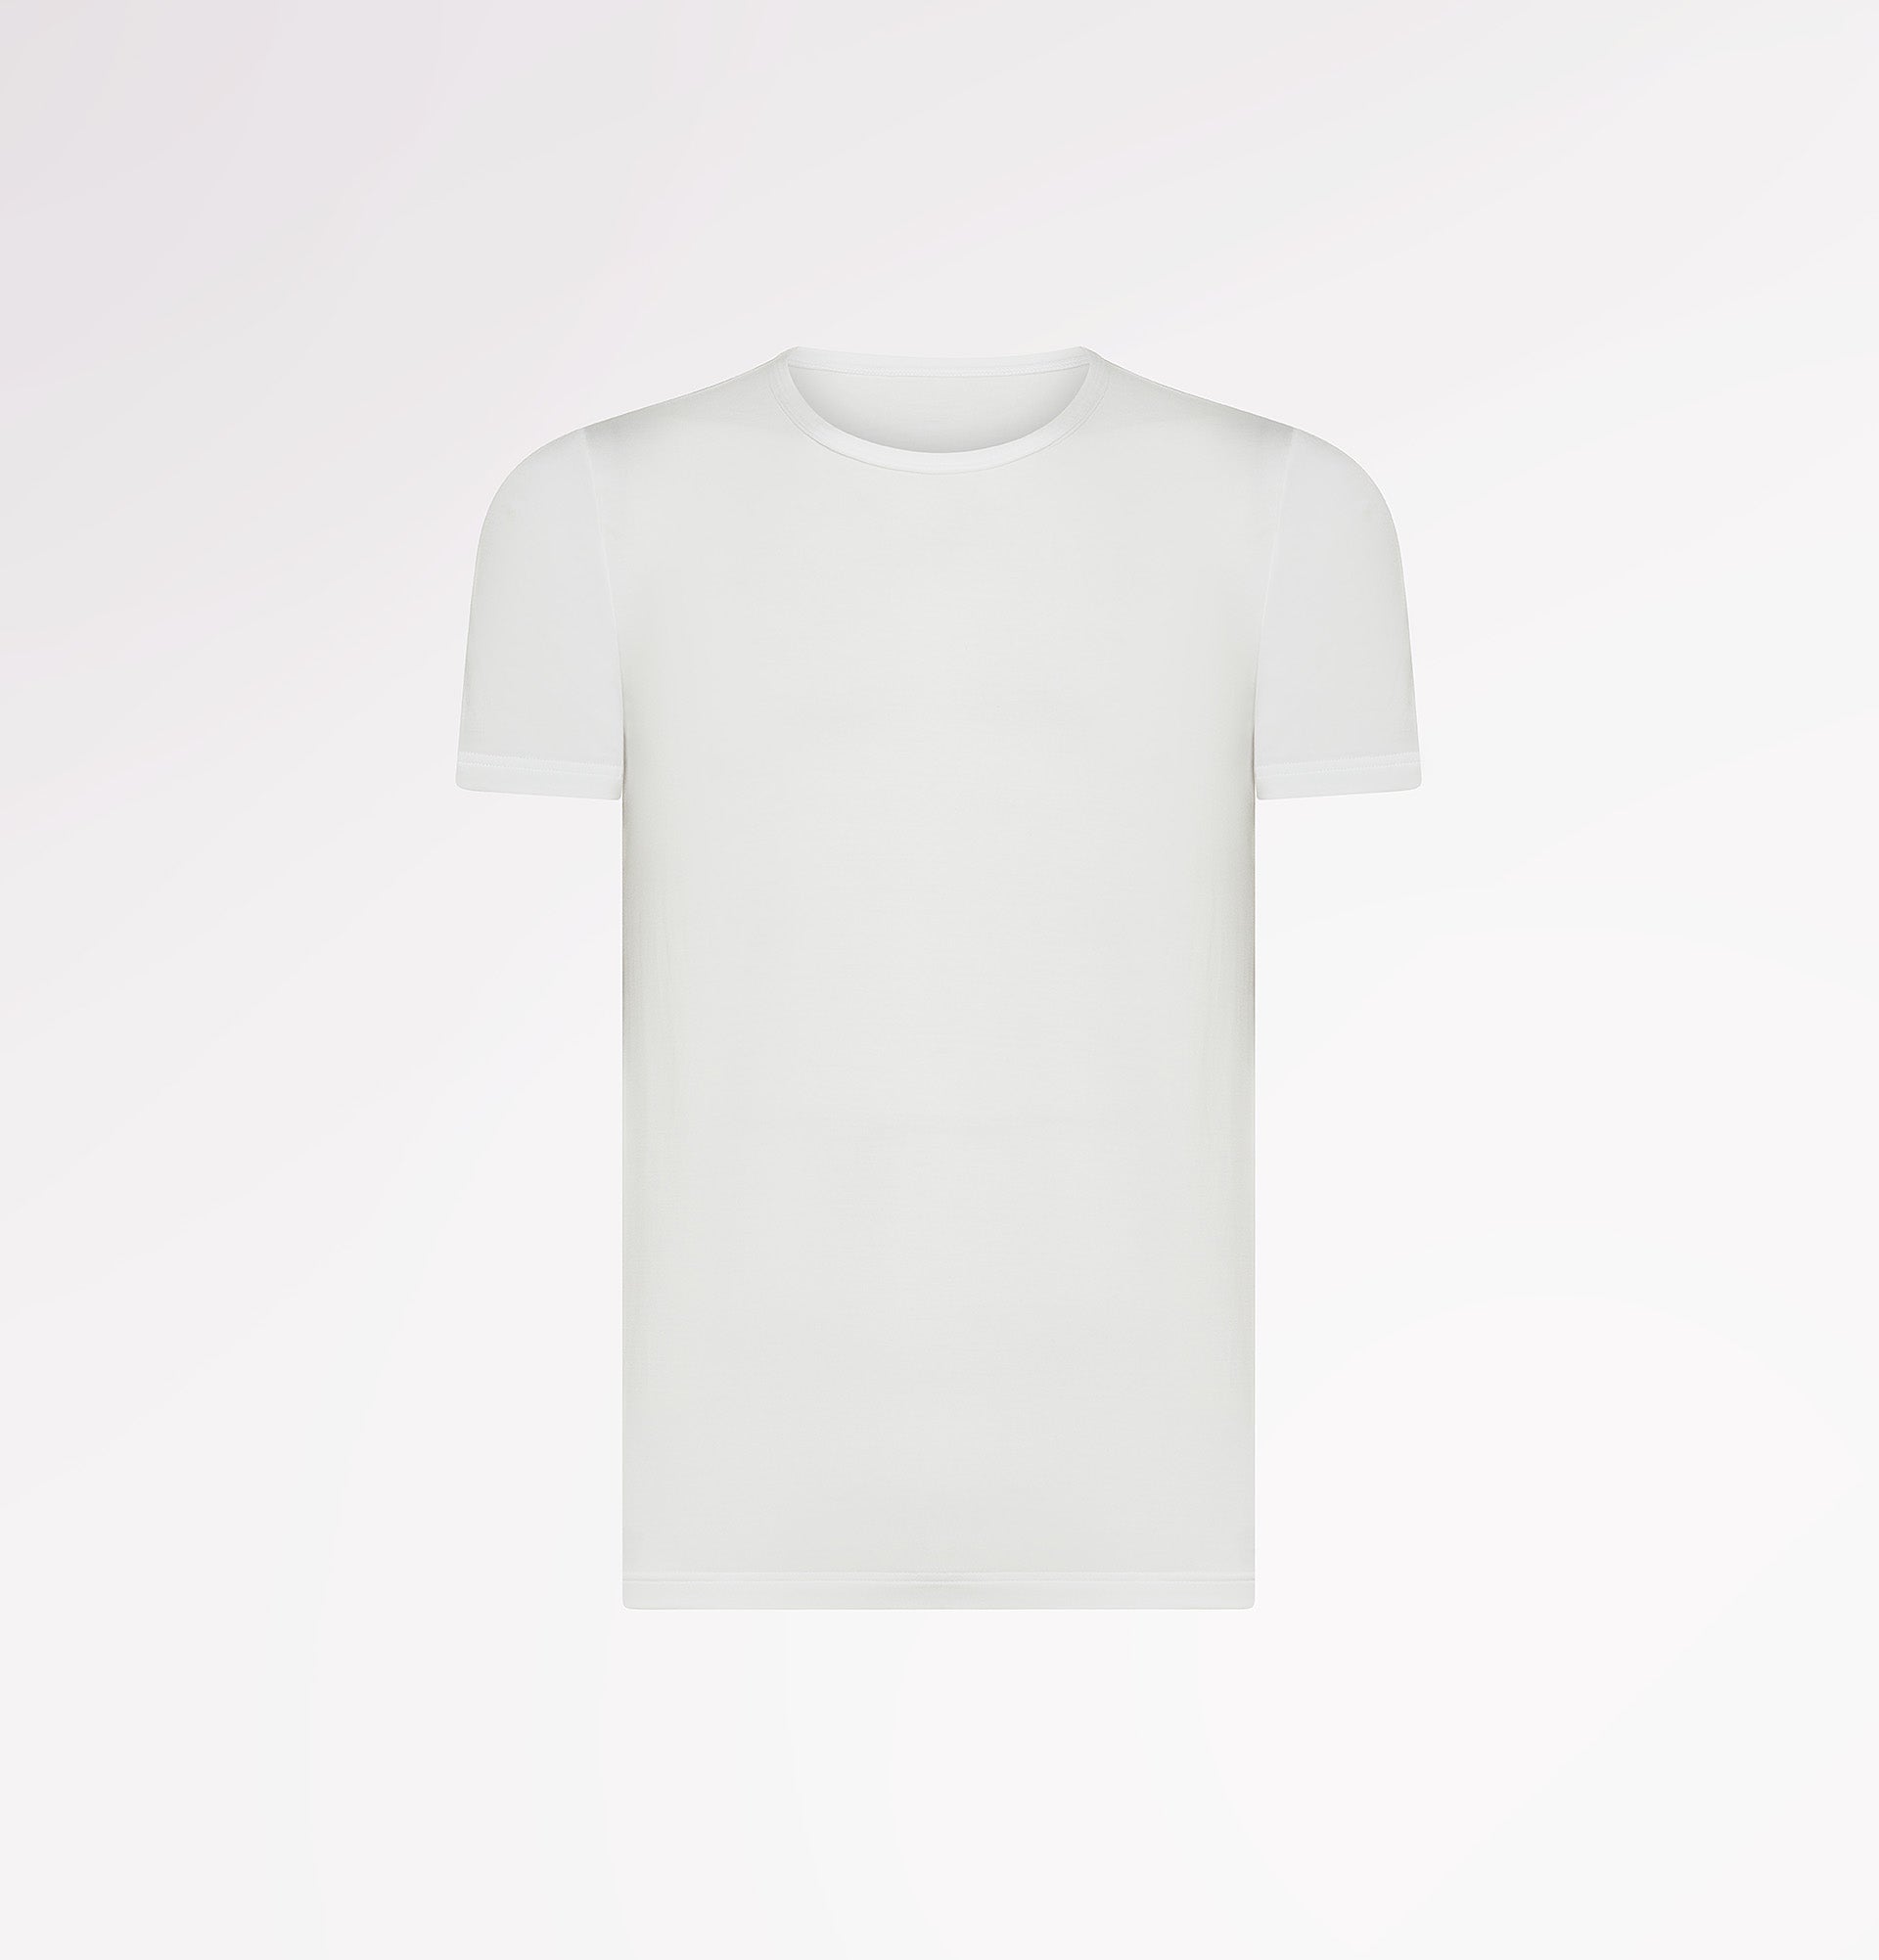 Men's T-shirt in natural fabric